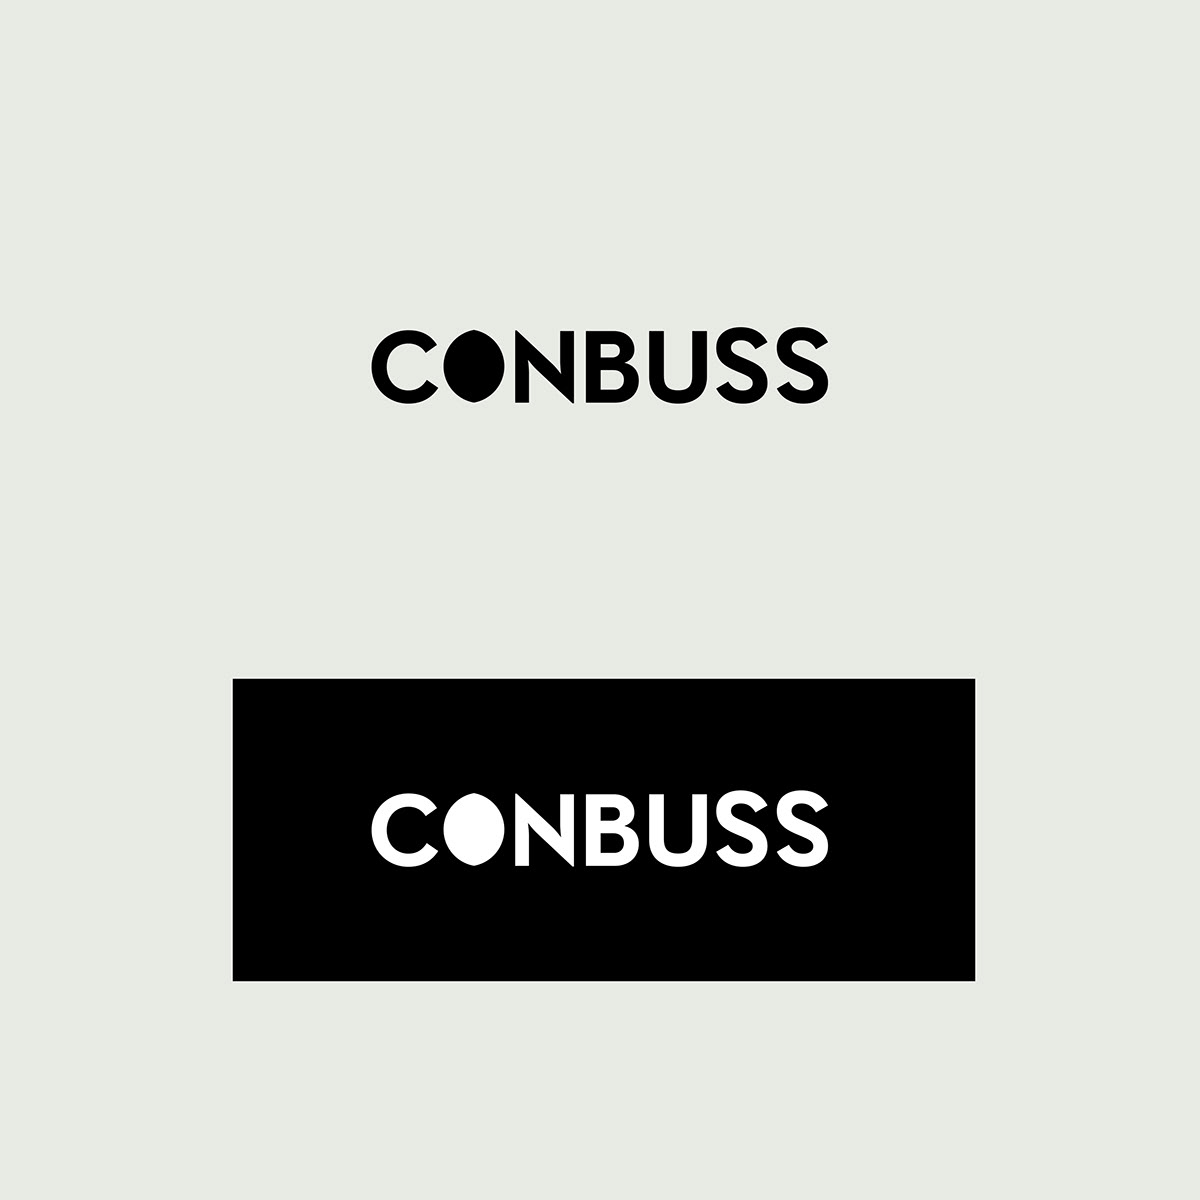 conbuss information Technology context